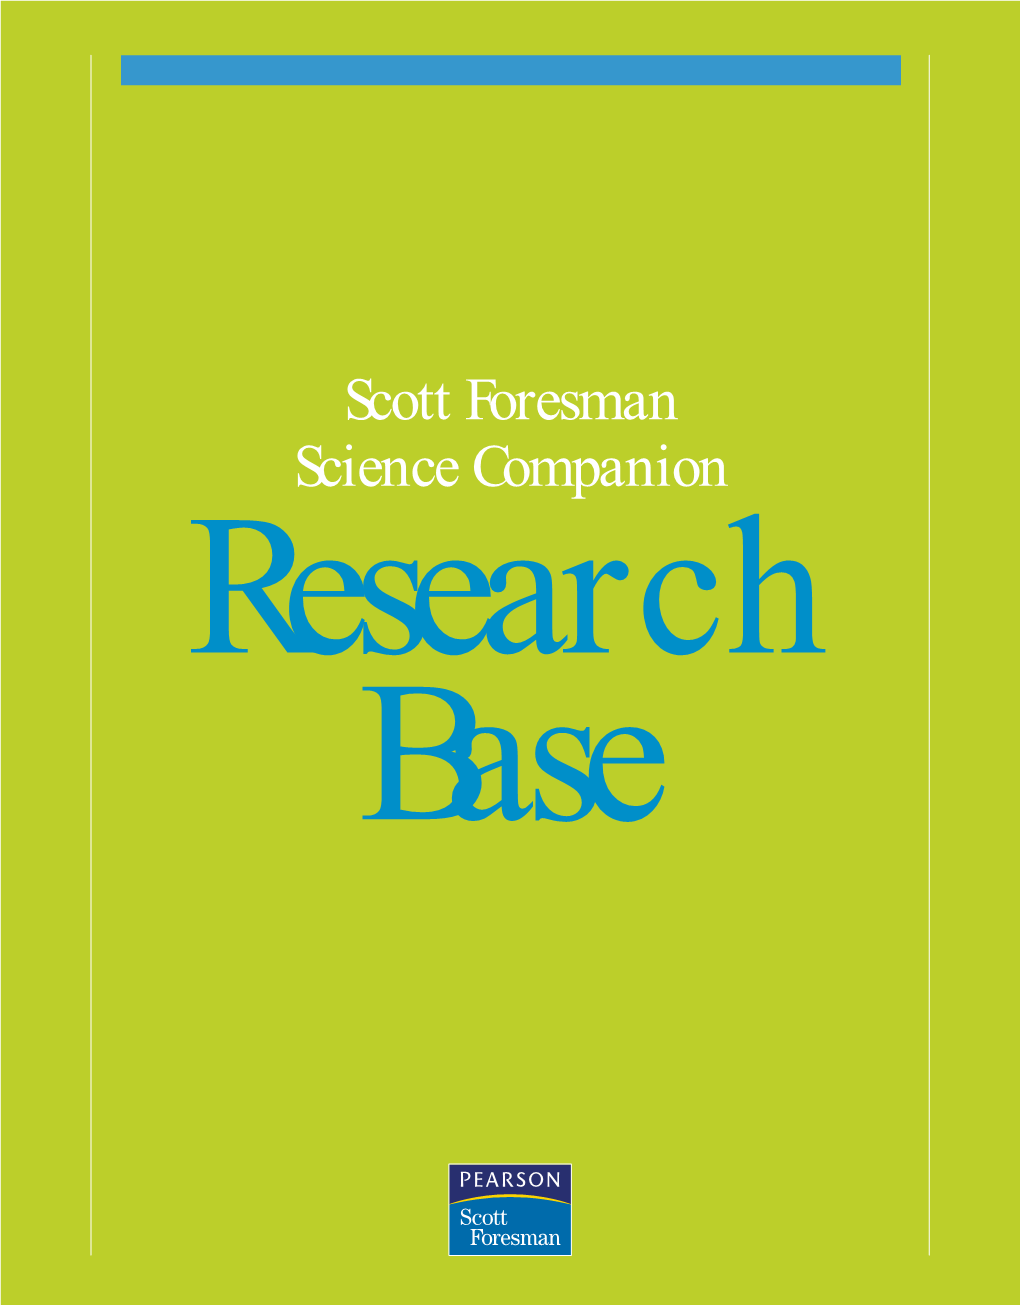 Scott Foresman Science Companion